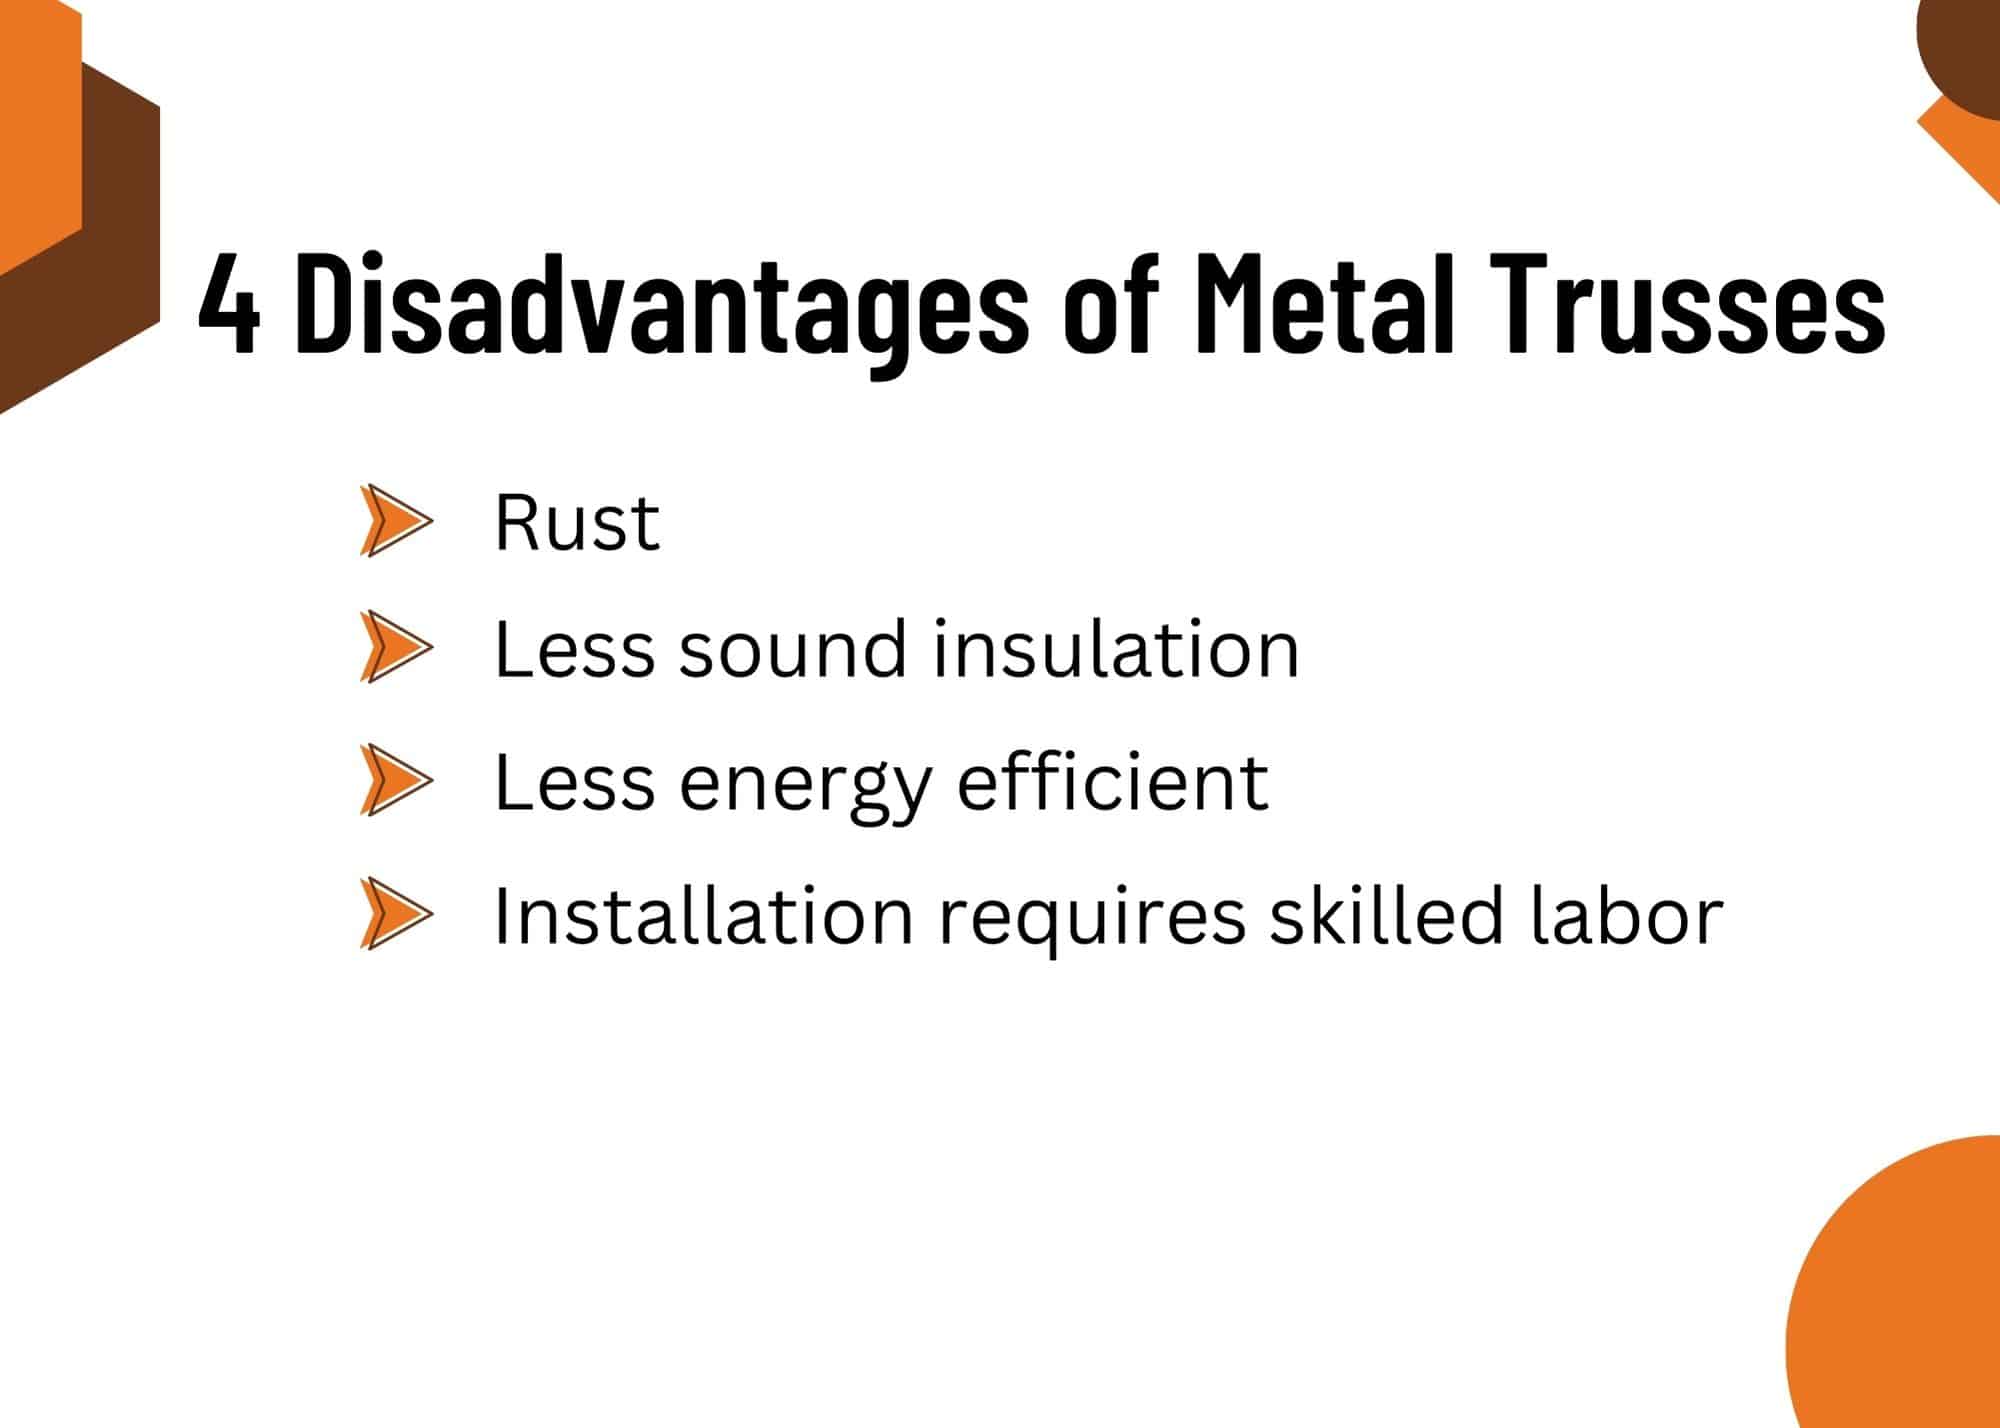 Disadvantages of metal trusses